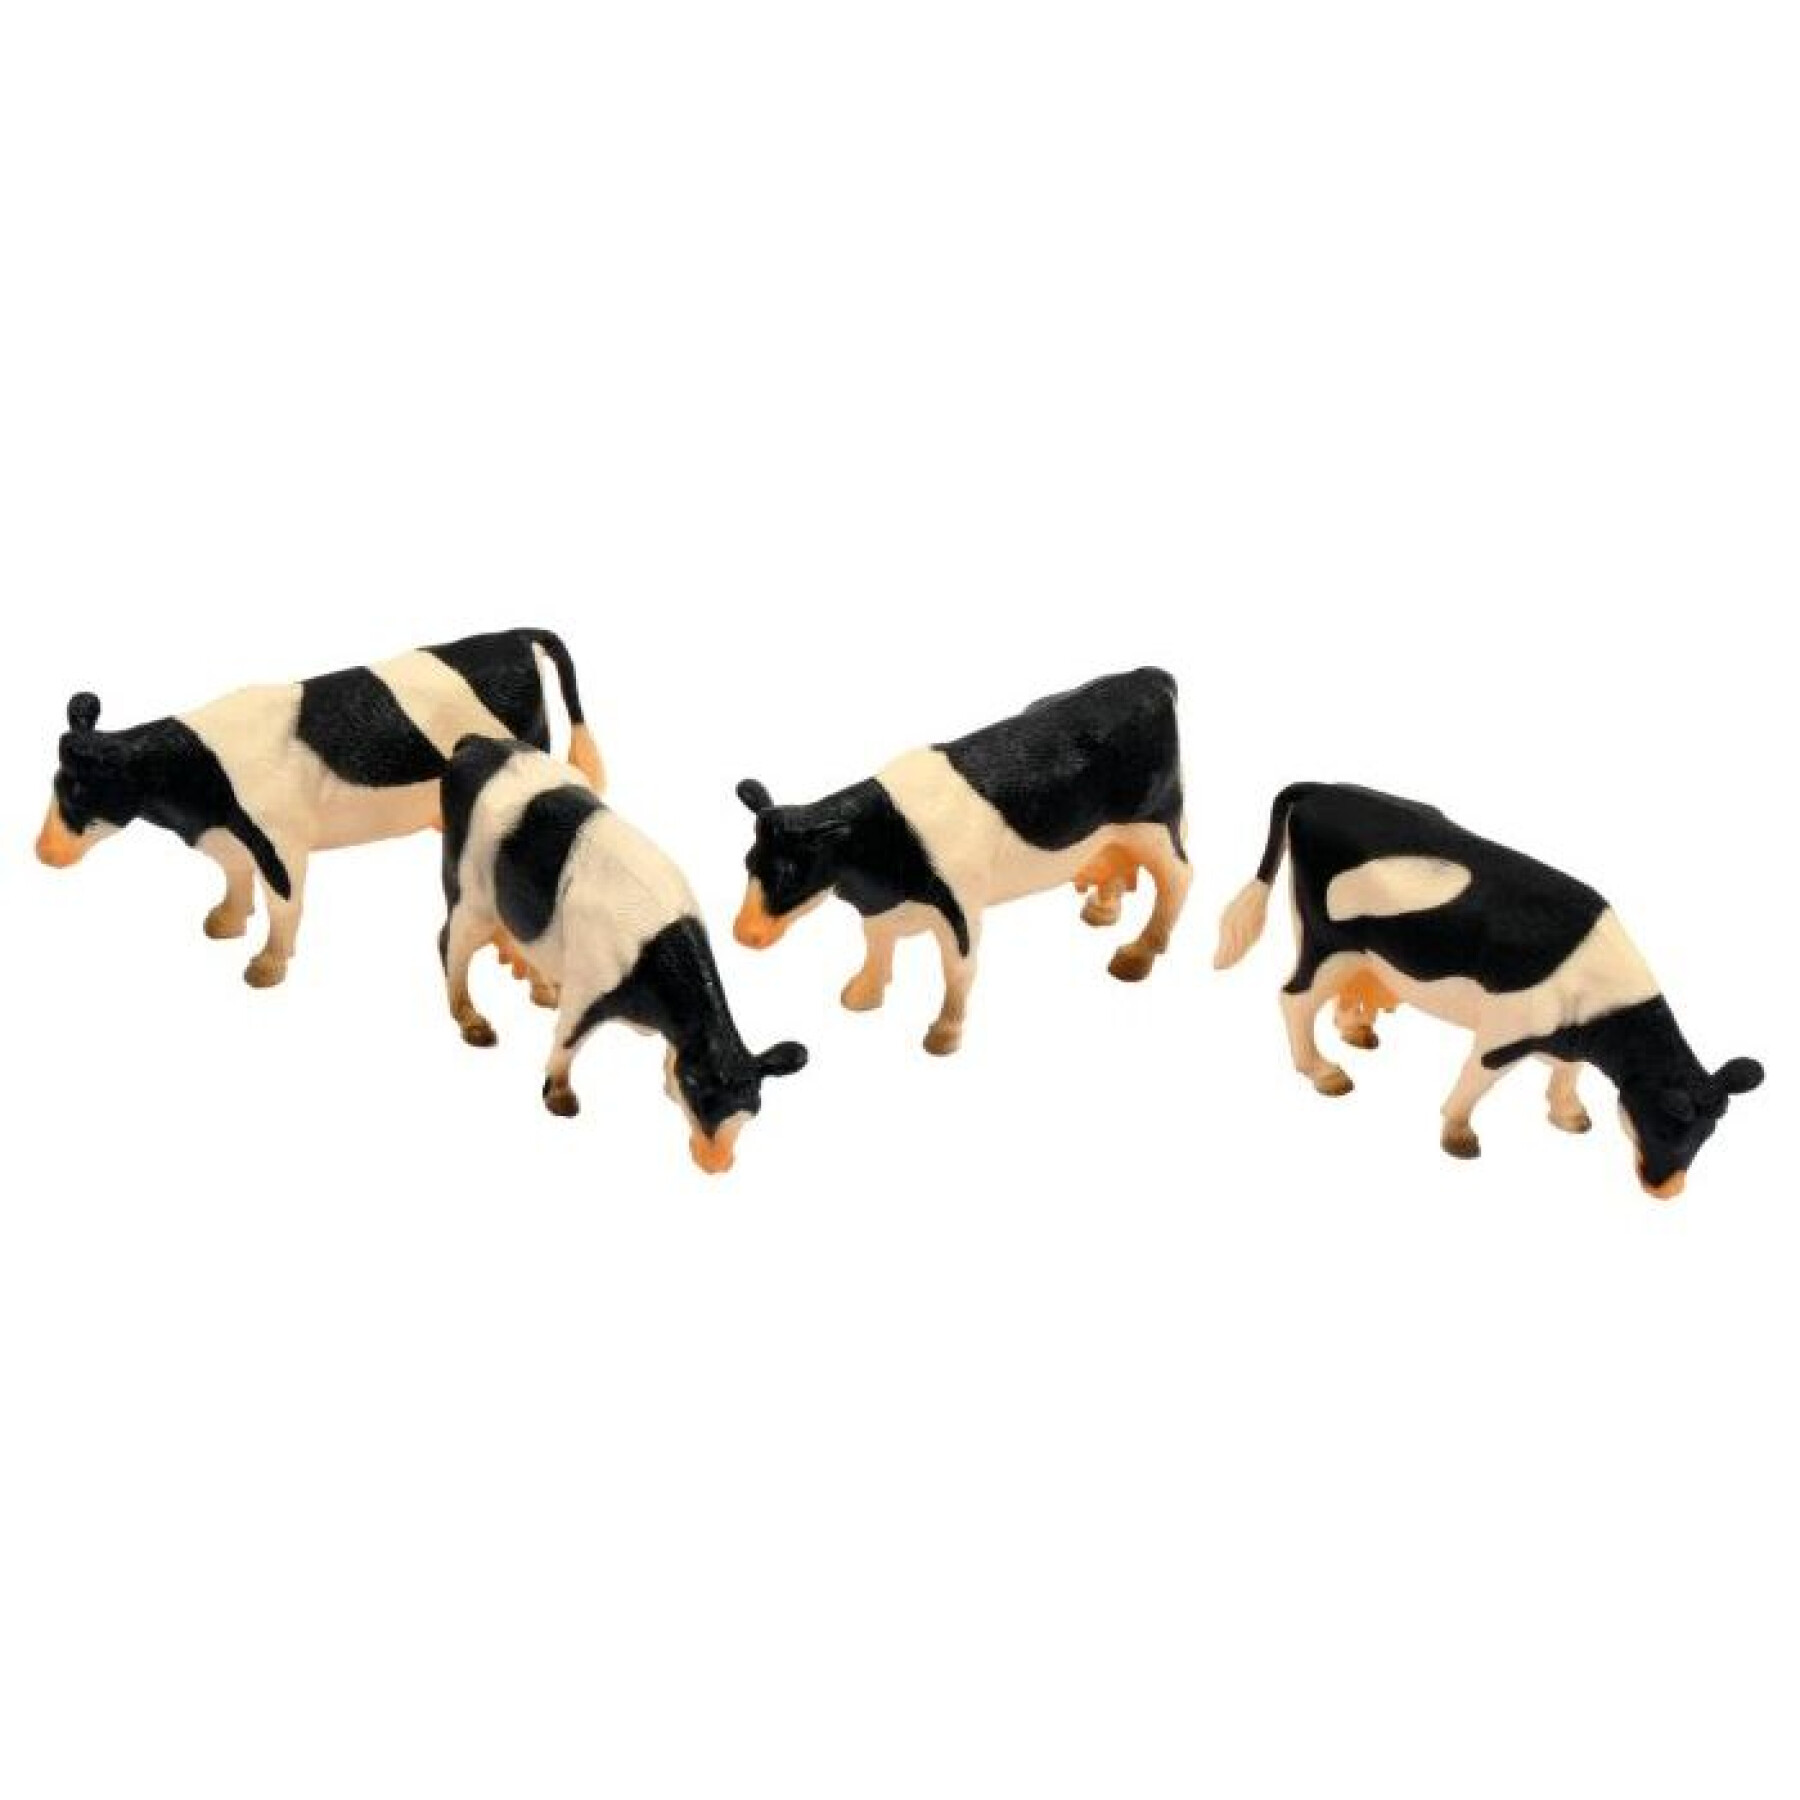 Figurine - cows Kidsglobe (x4)